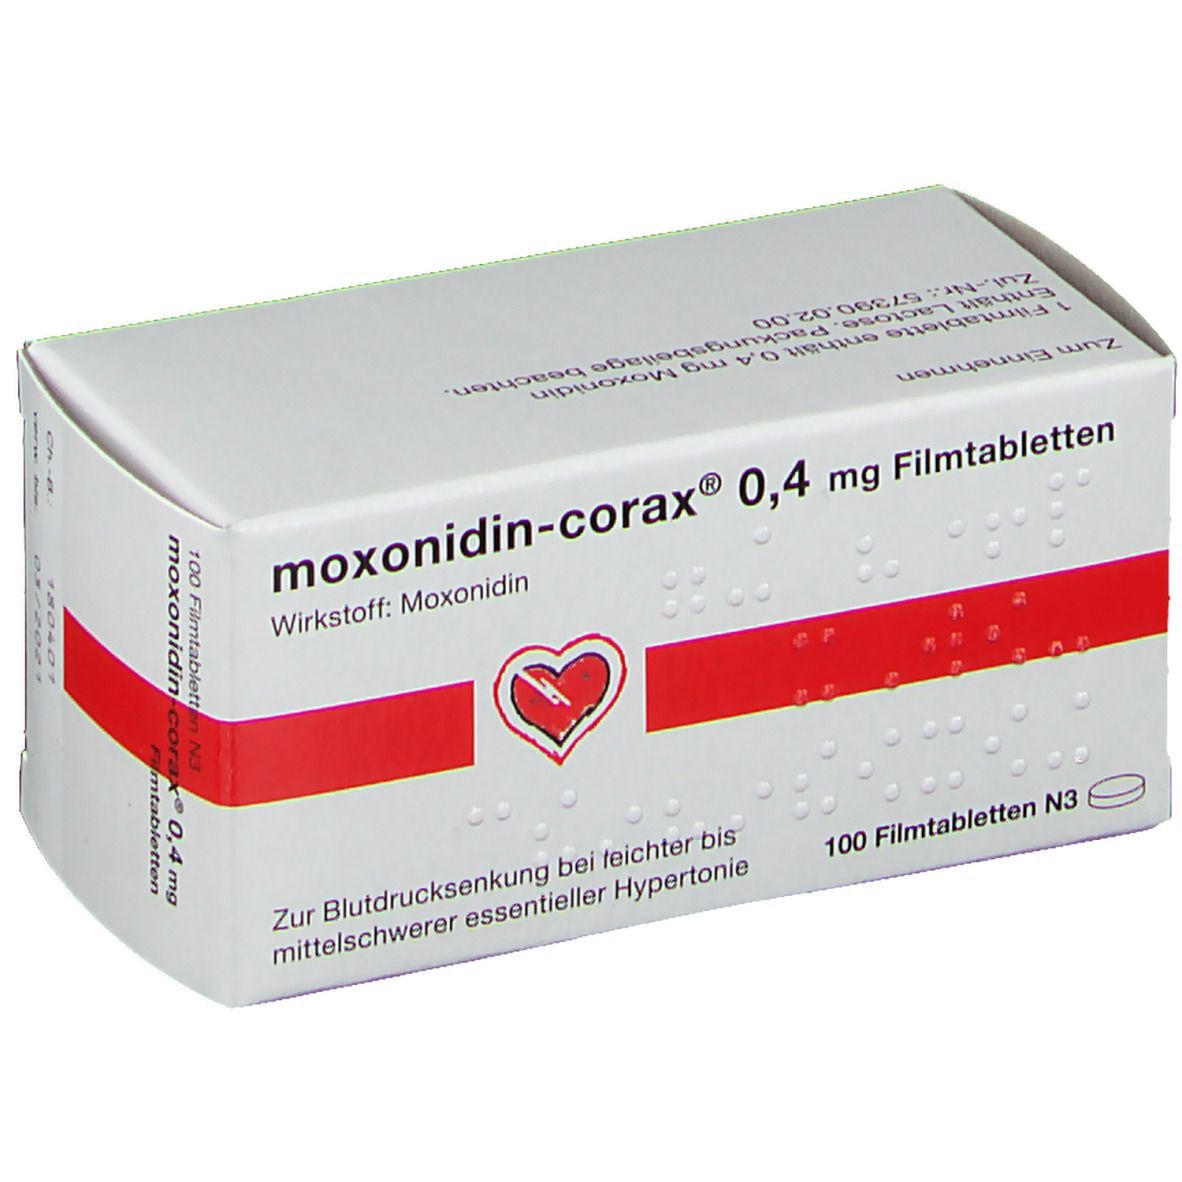 moxonidin-corax® 0,4 mg